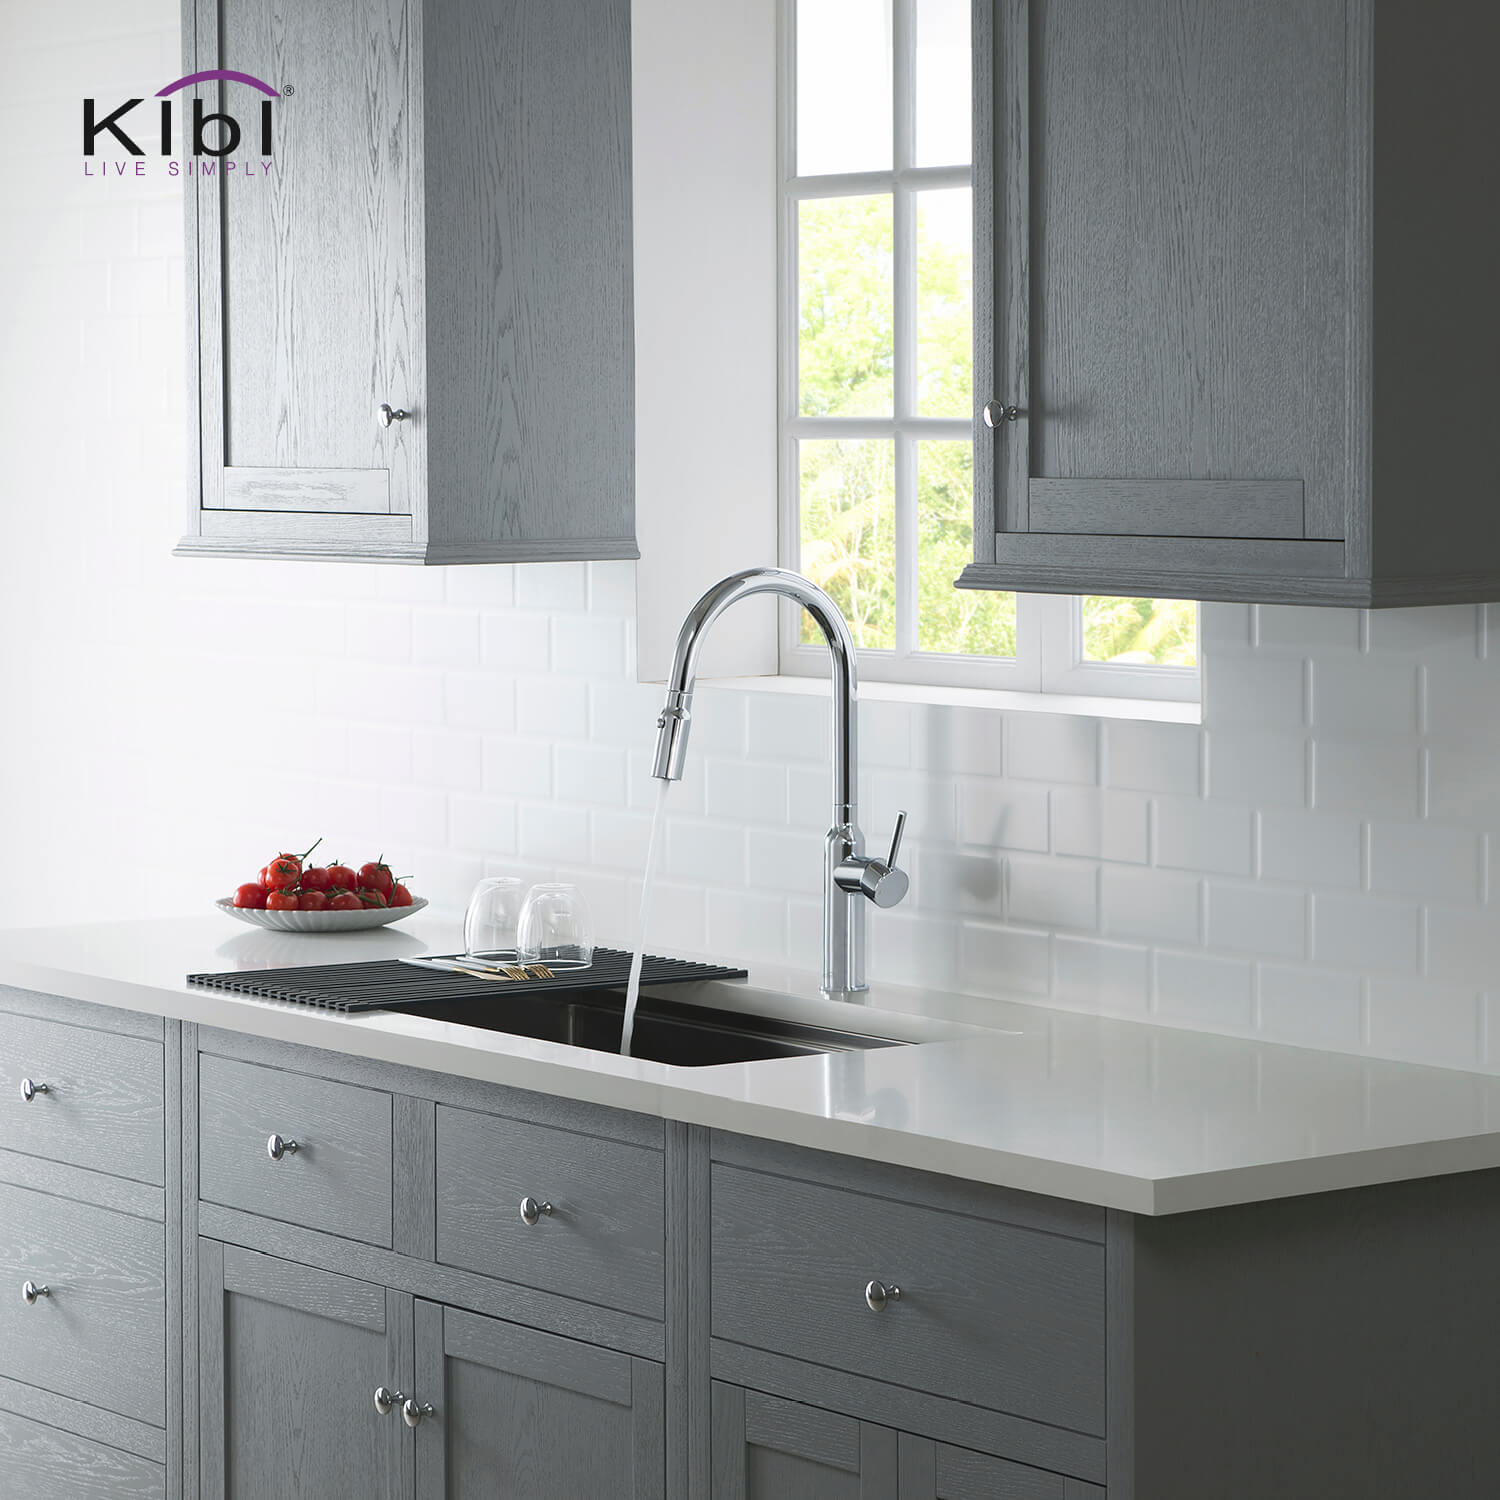 Kibi Hilo Single Handle High Arc Pull Down Kitchen Faucet in Chrome Finish